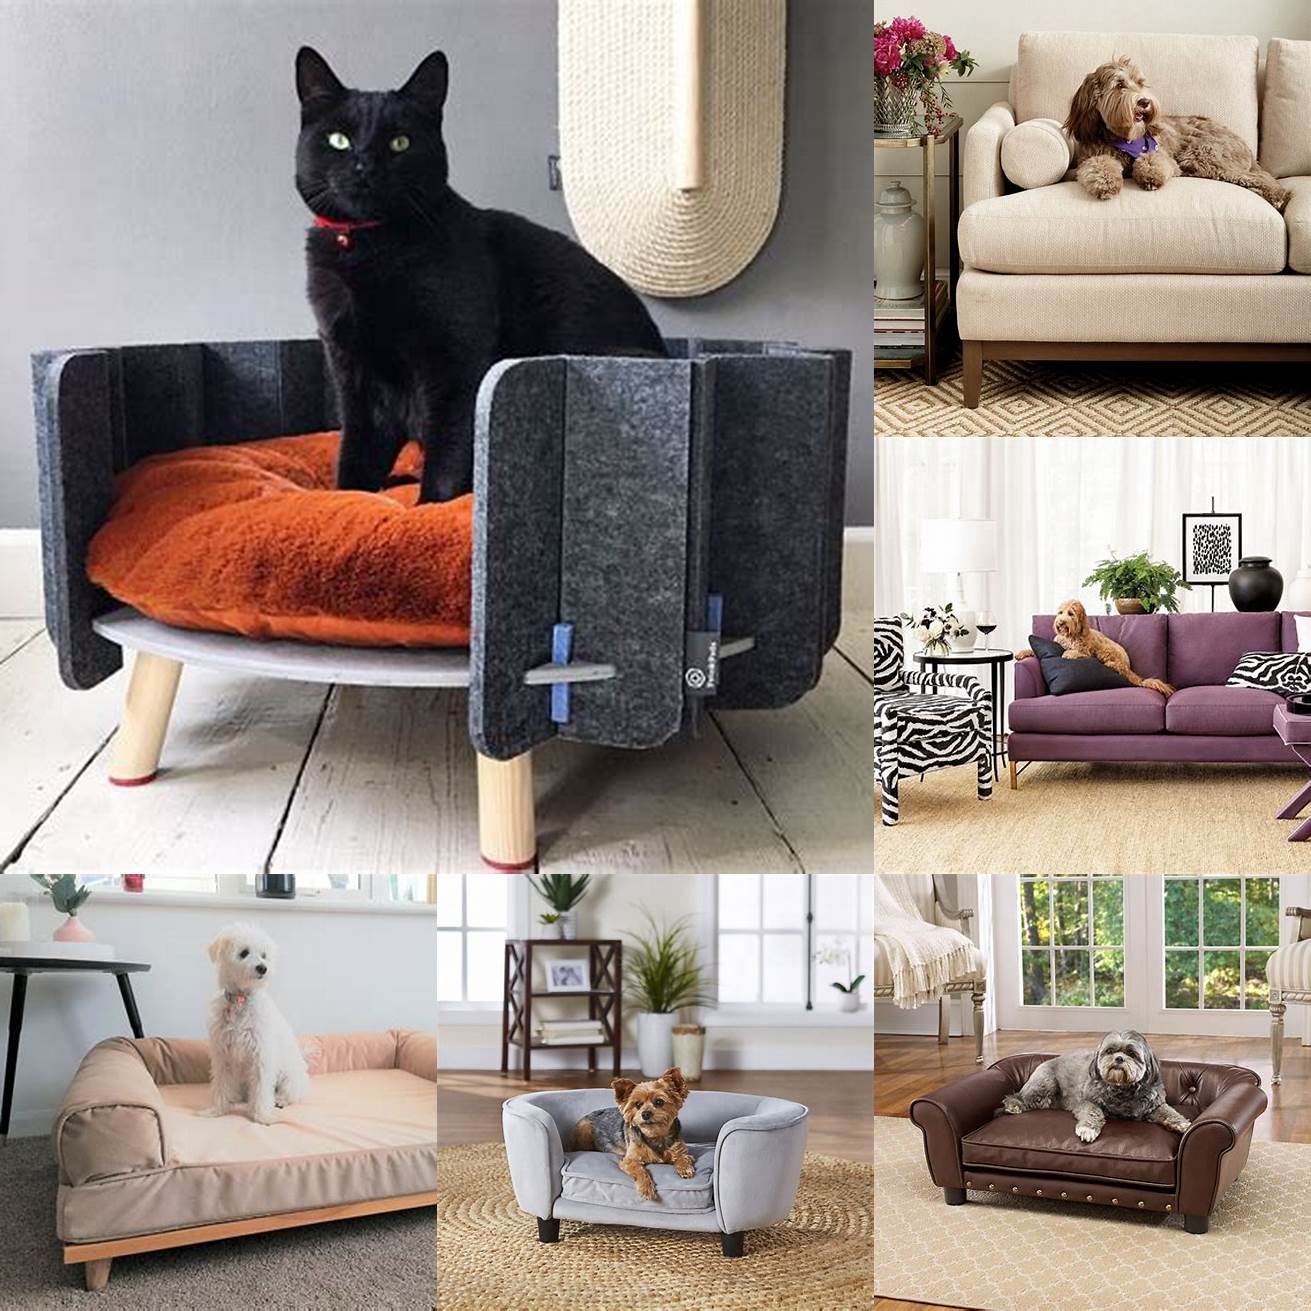 Teak Furniture and a Pet